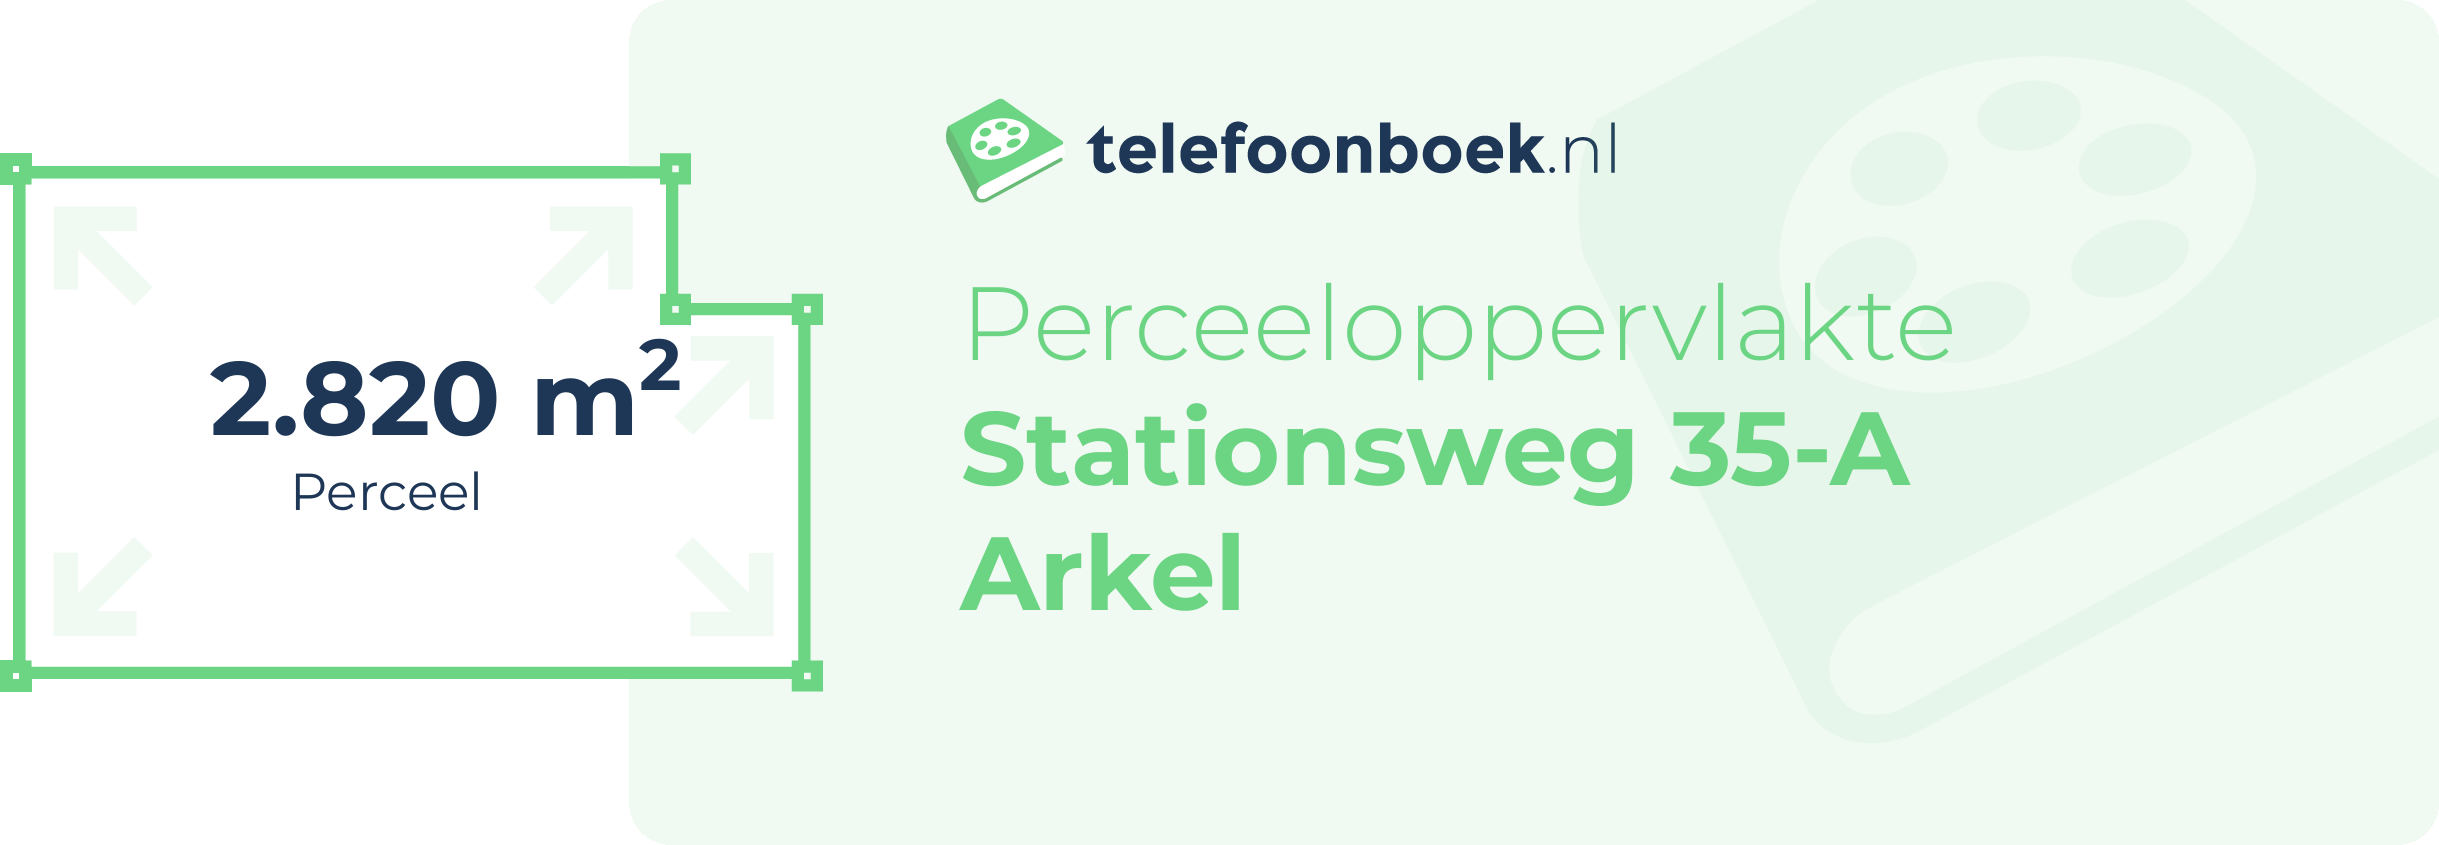 Perceeloppervlakte Stationsweg 35-A Arkel